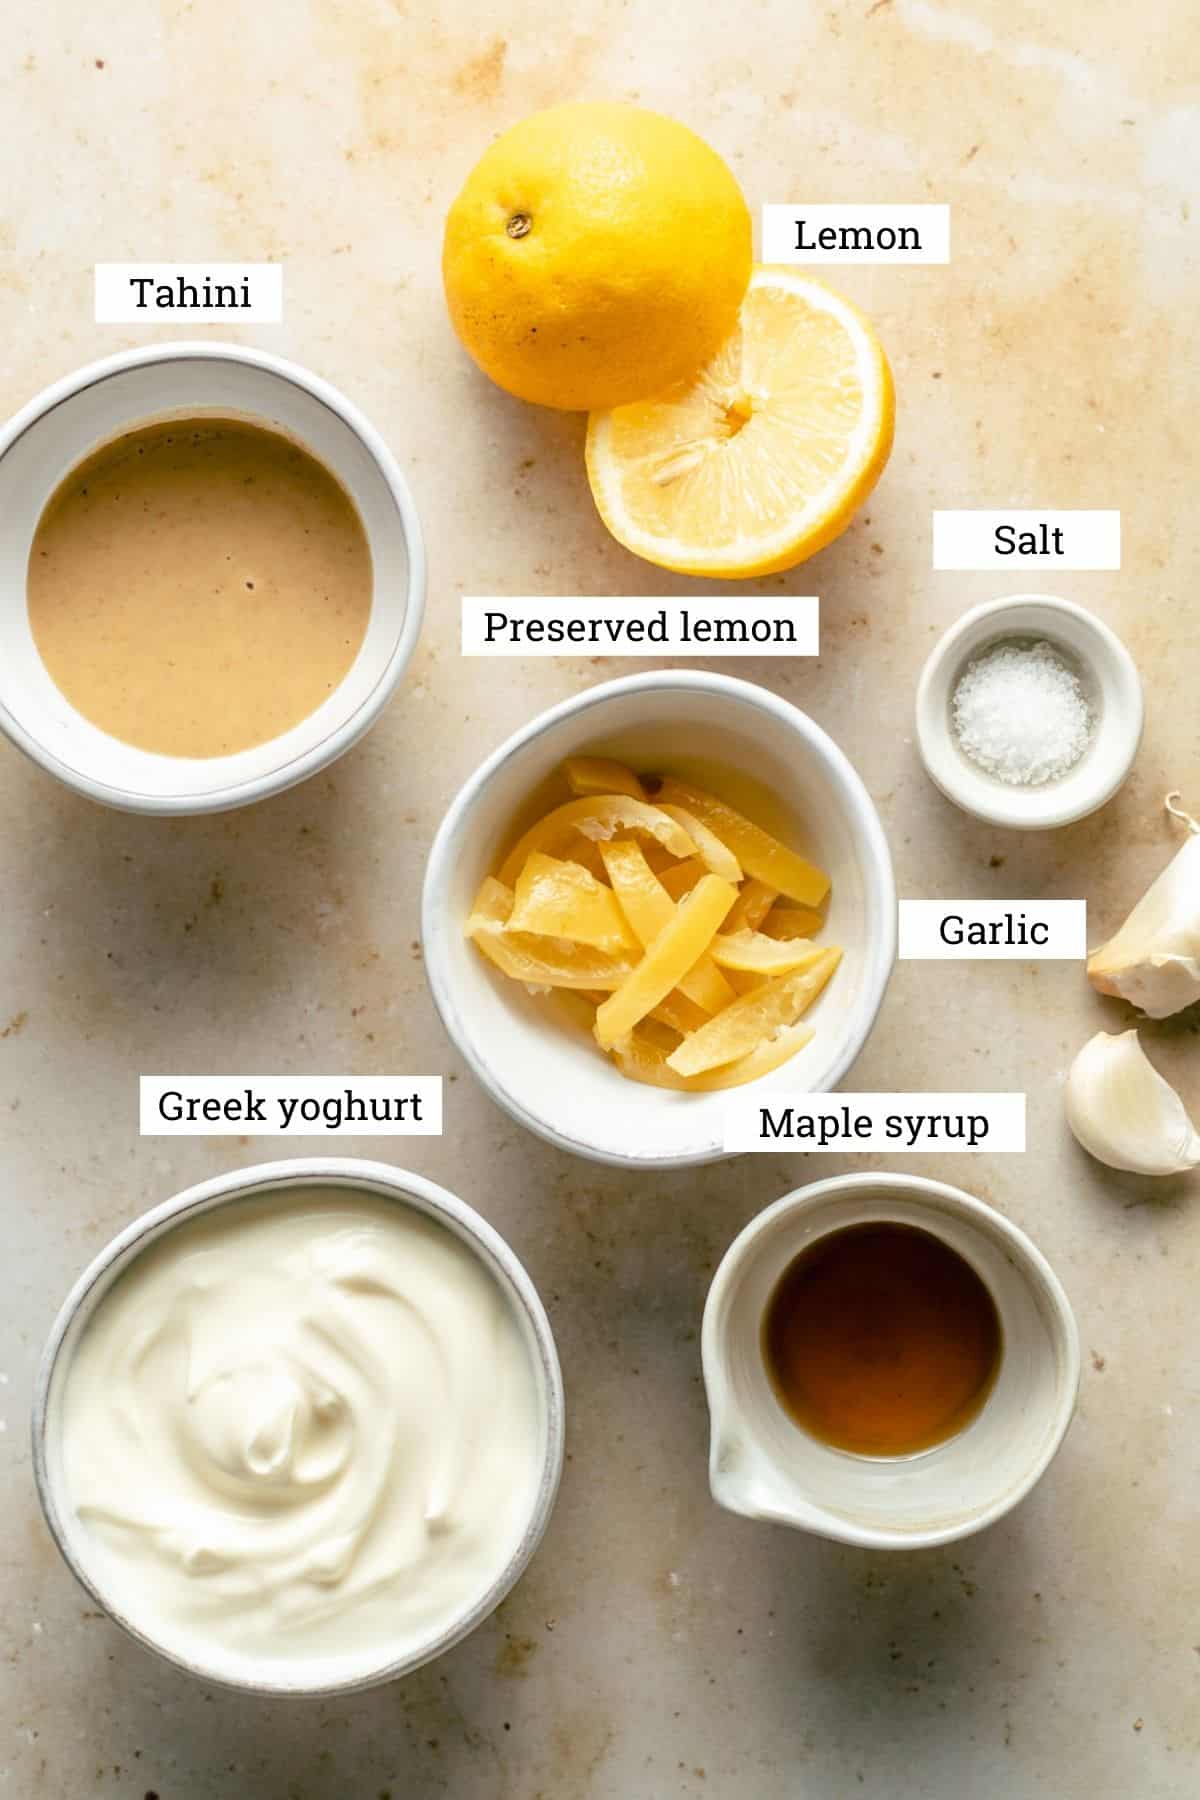 Lemon and garlic yoghurt dressing in bowls.